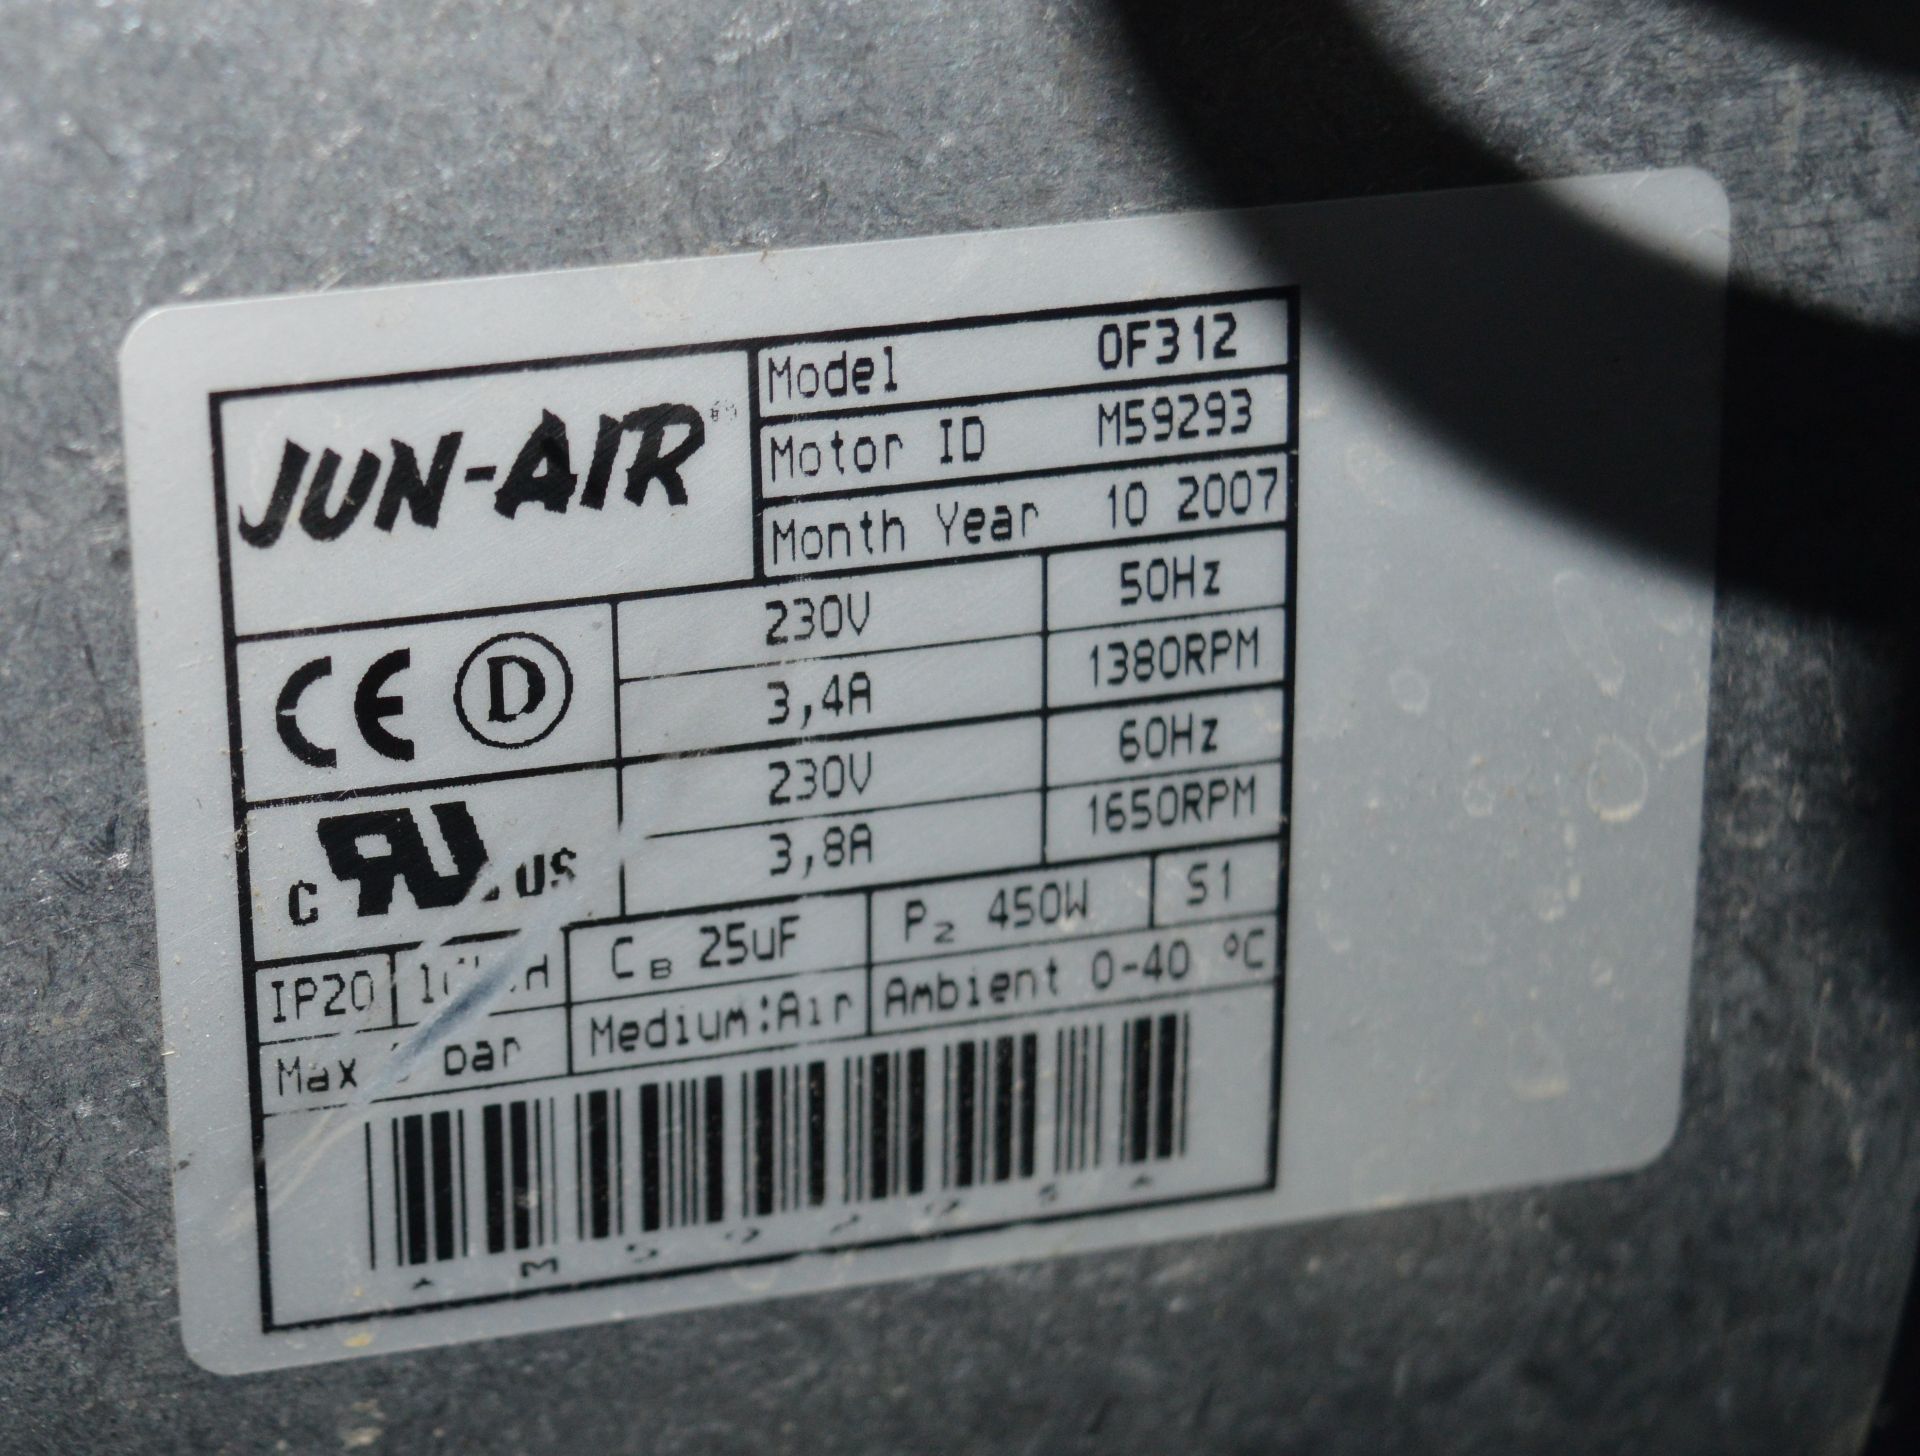 1 x Jun-Air OF302-25B Oil-free 25l Air Compressor - Good Working Order - Quiet Operation - Oil - Image 3 of 5